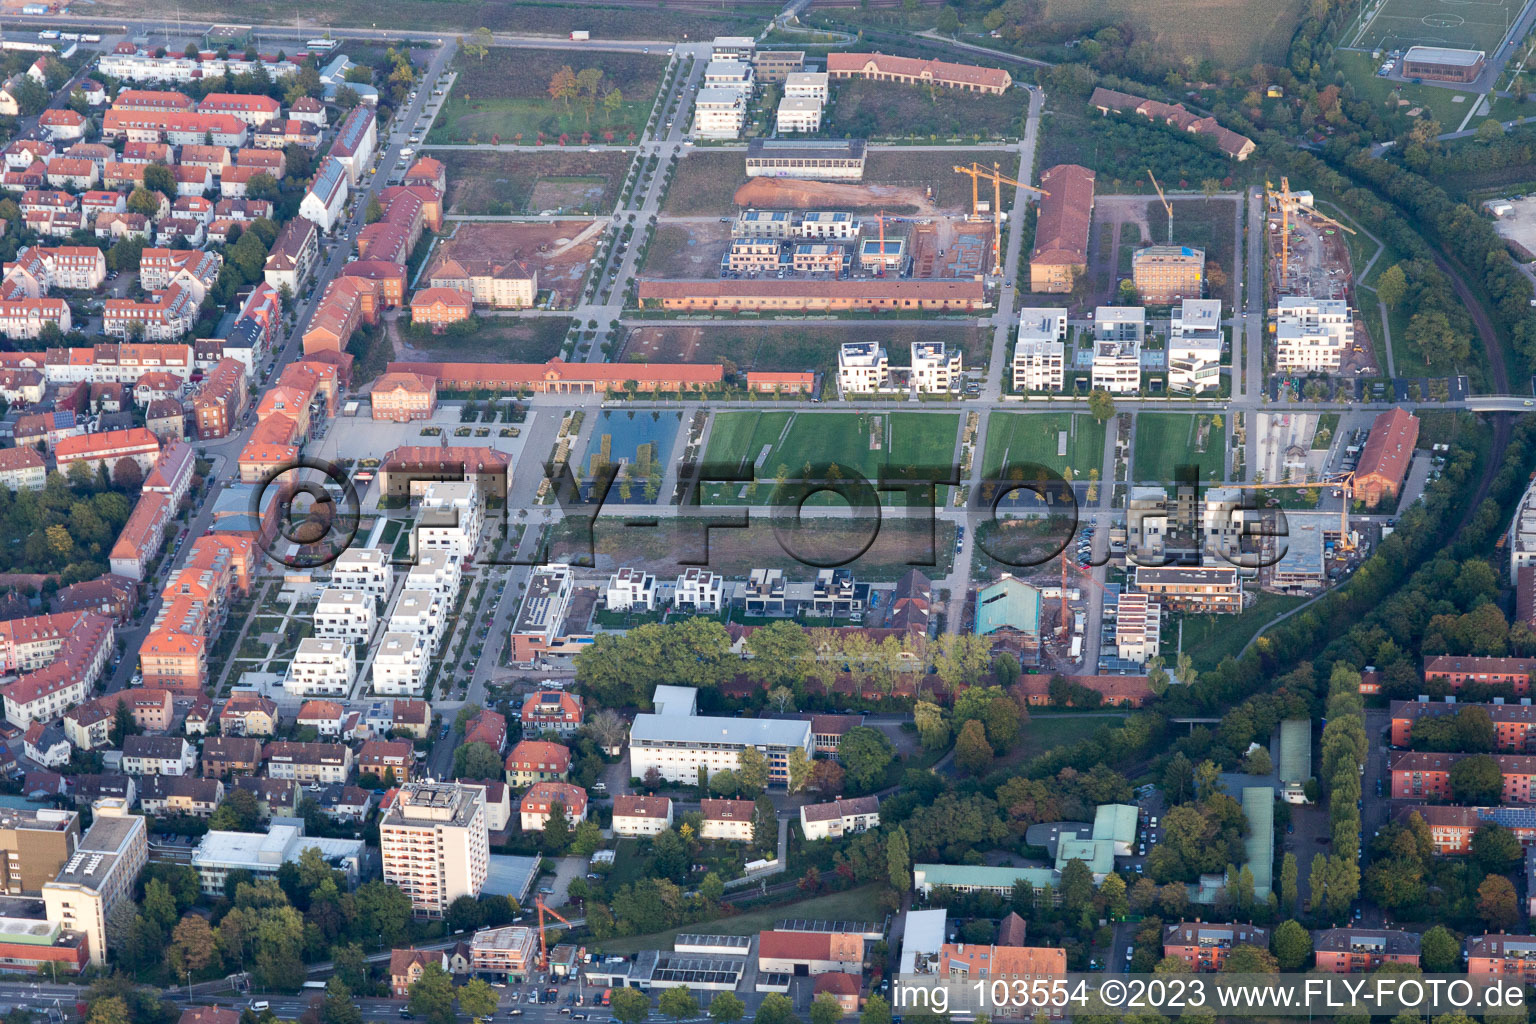 Aerial view of Landau South in Landau in der Pfalz in the state Rhineland-Palatinate, Germany